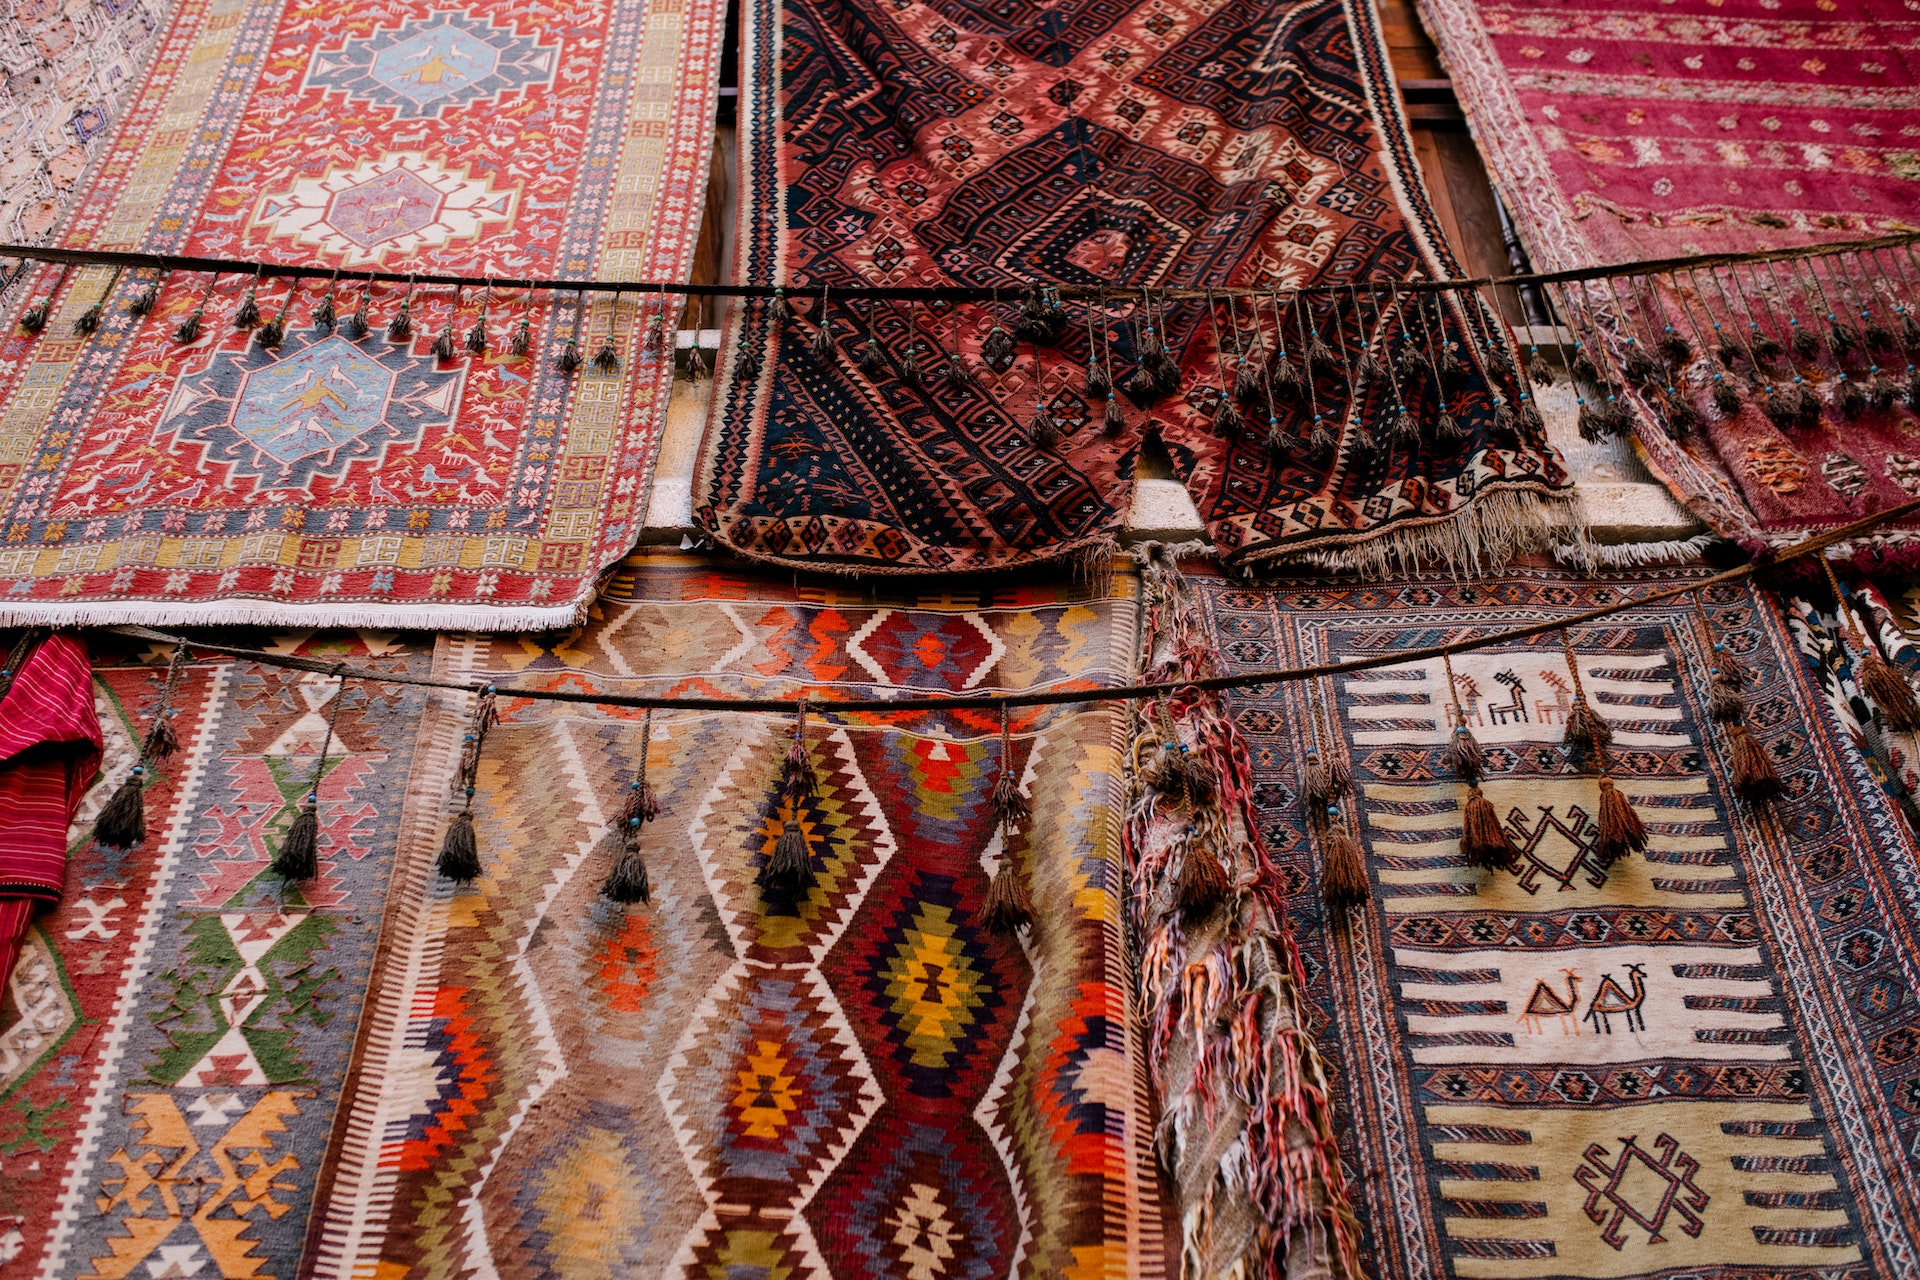 woven Persian rugs in an open market.